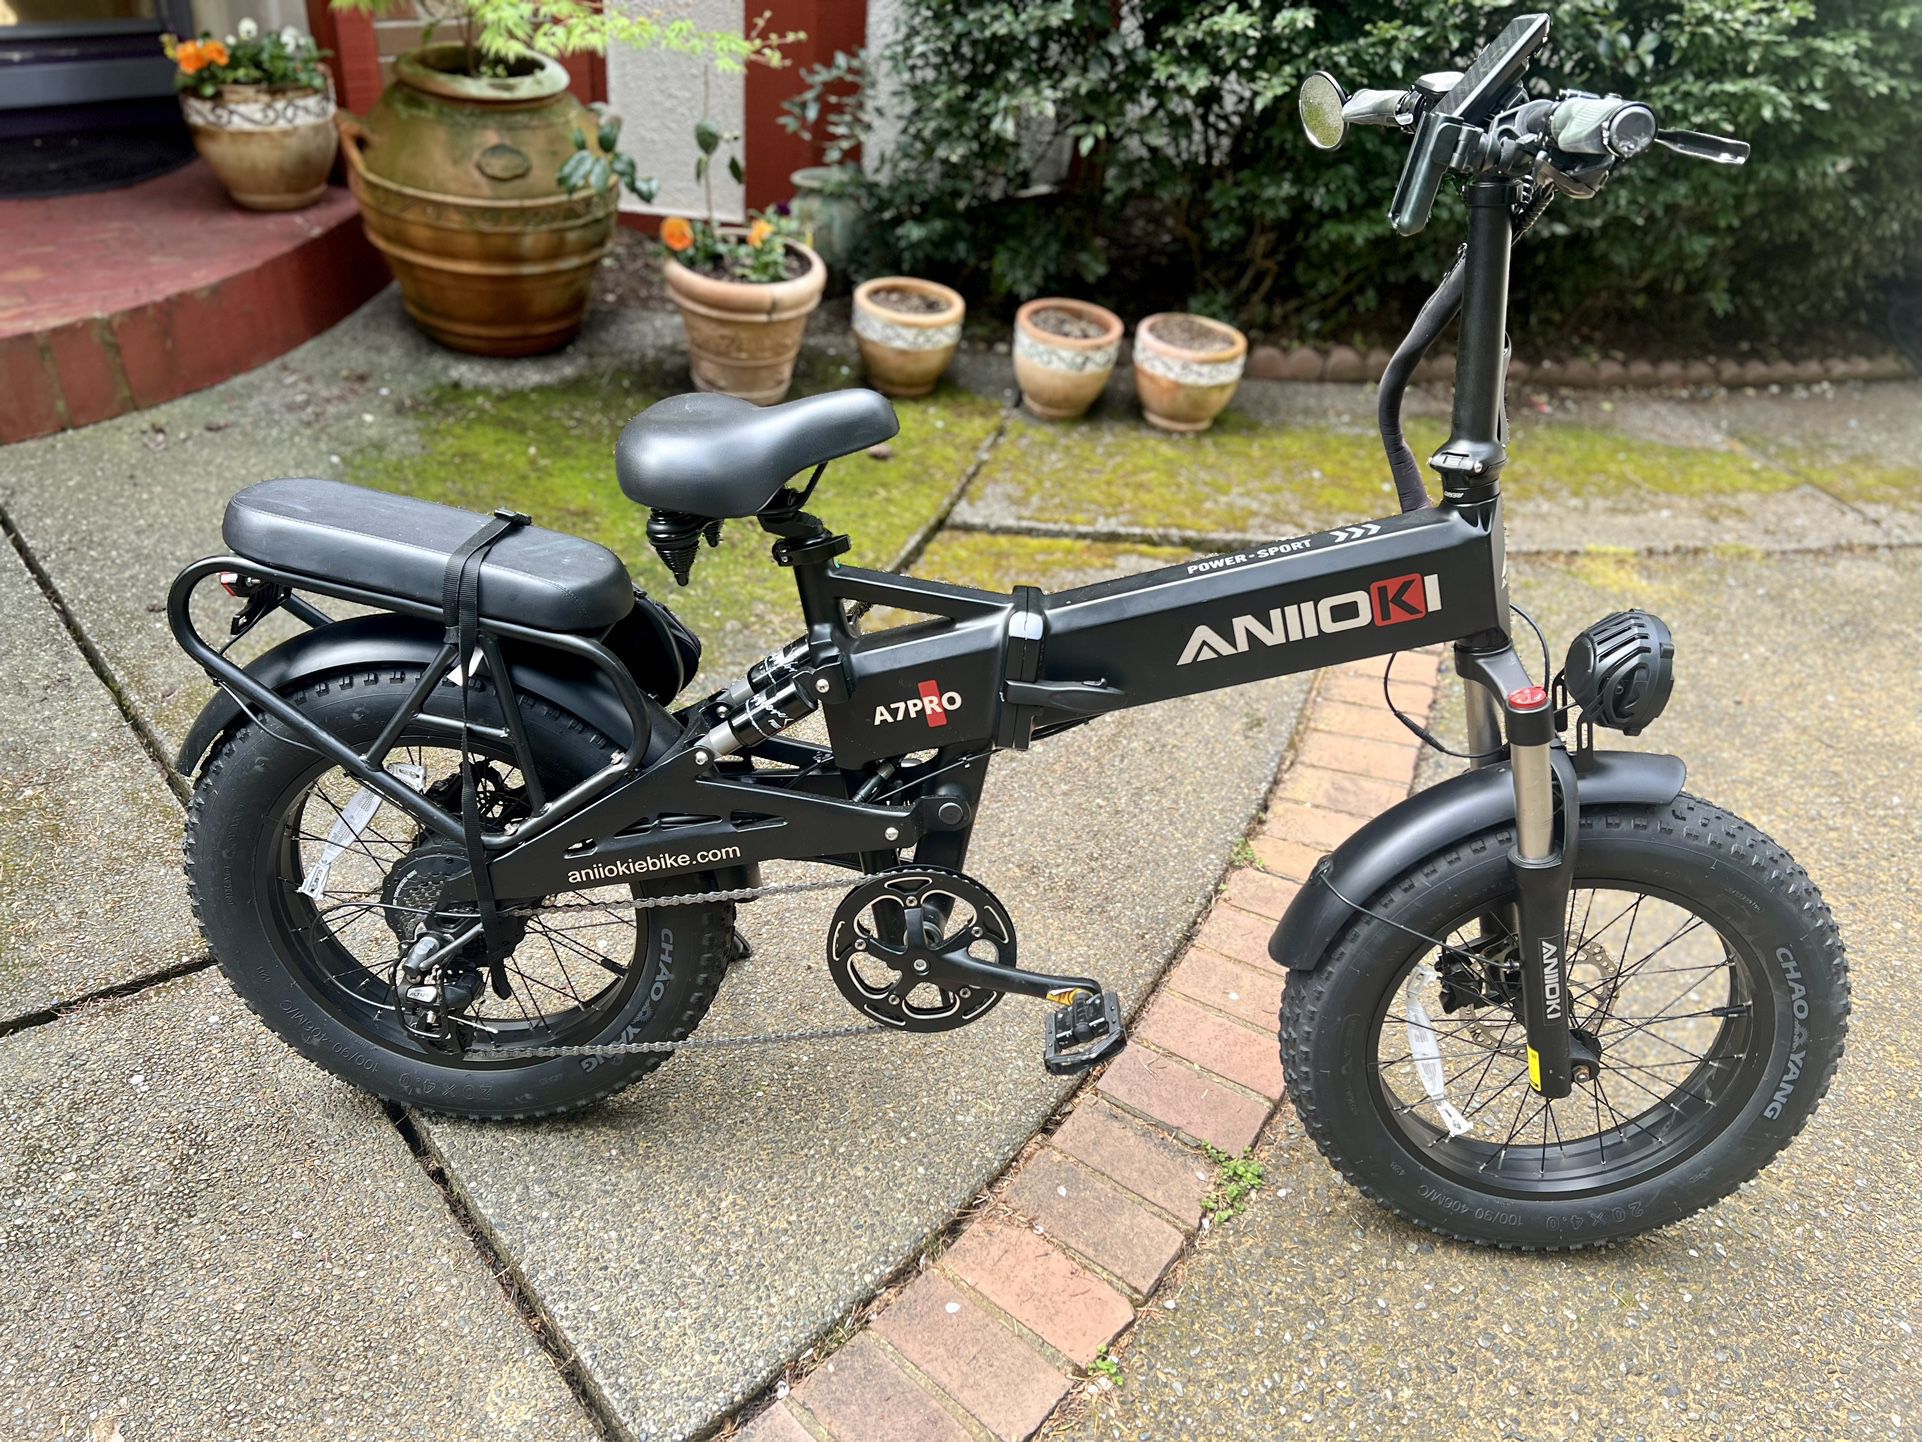 Aniioki A7 Pro 48V Dual Suspension Foldable E-Bike